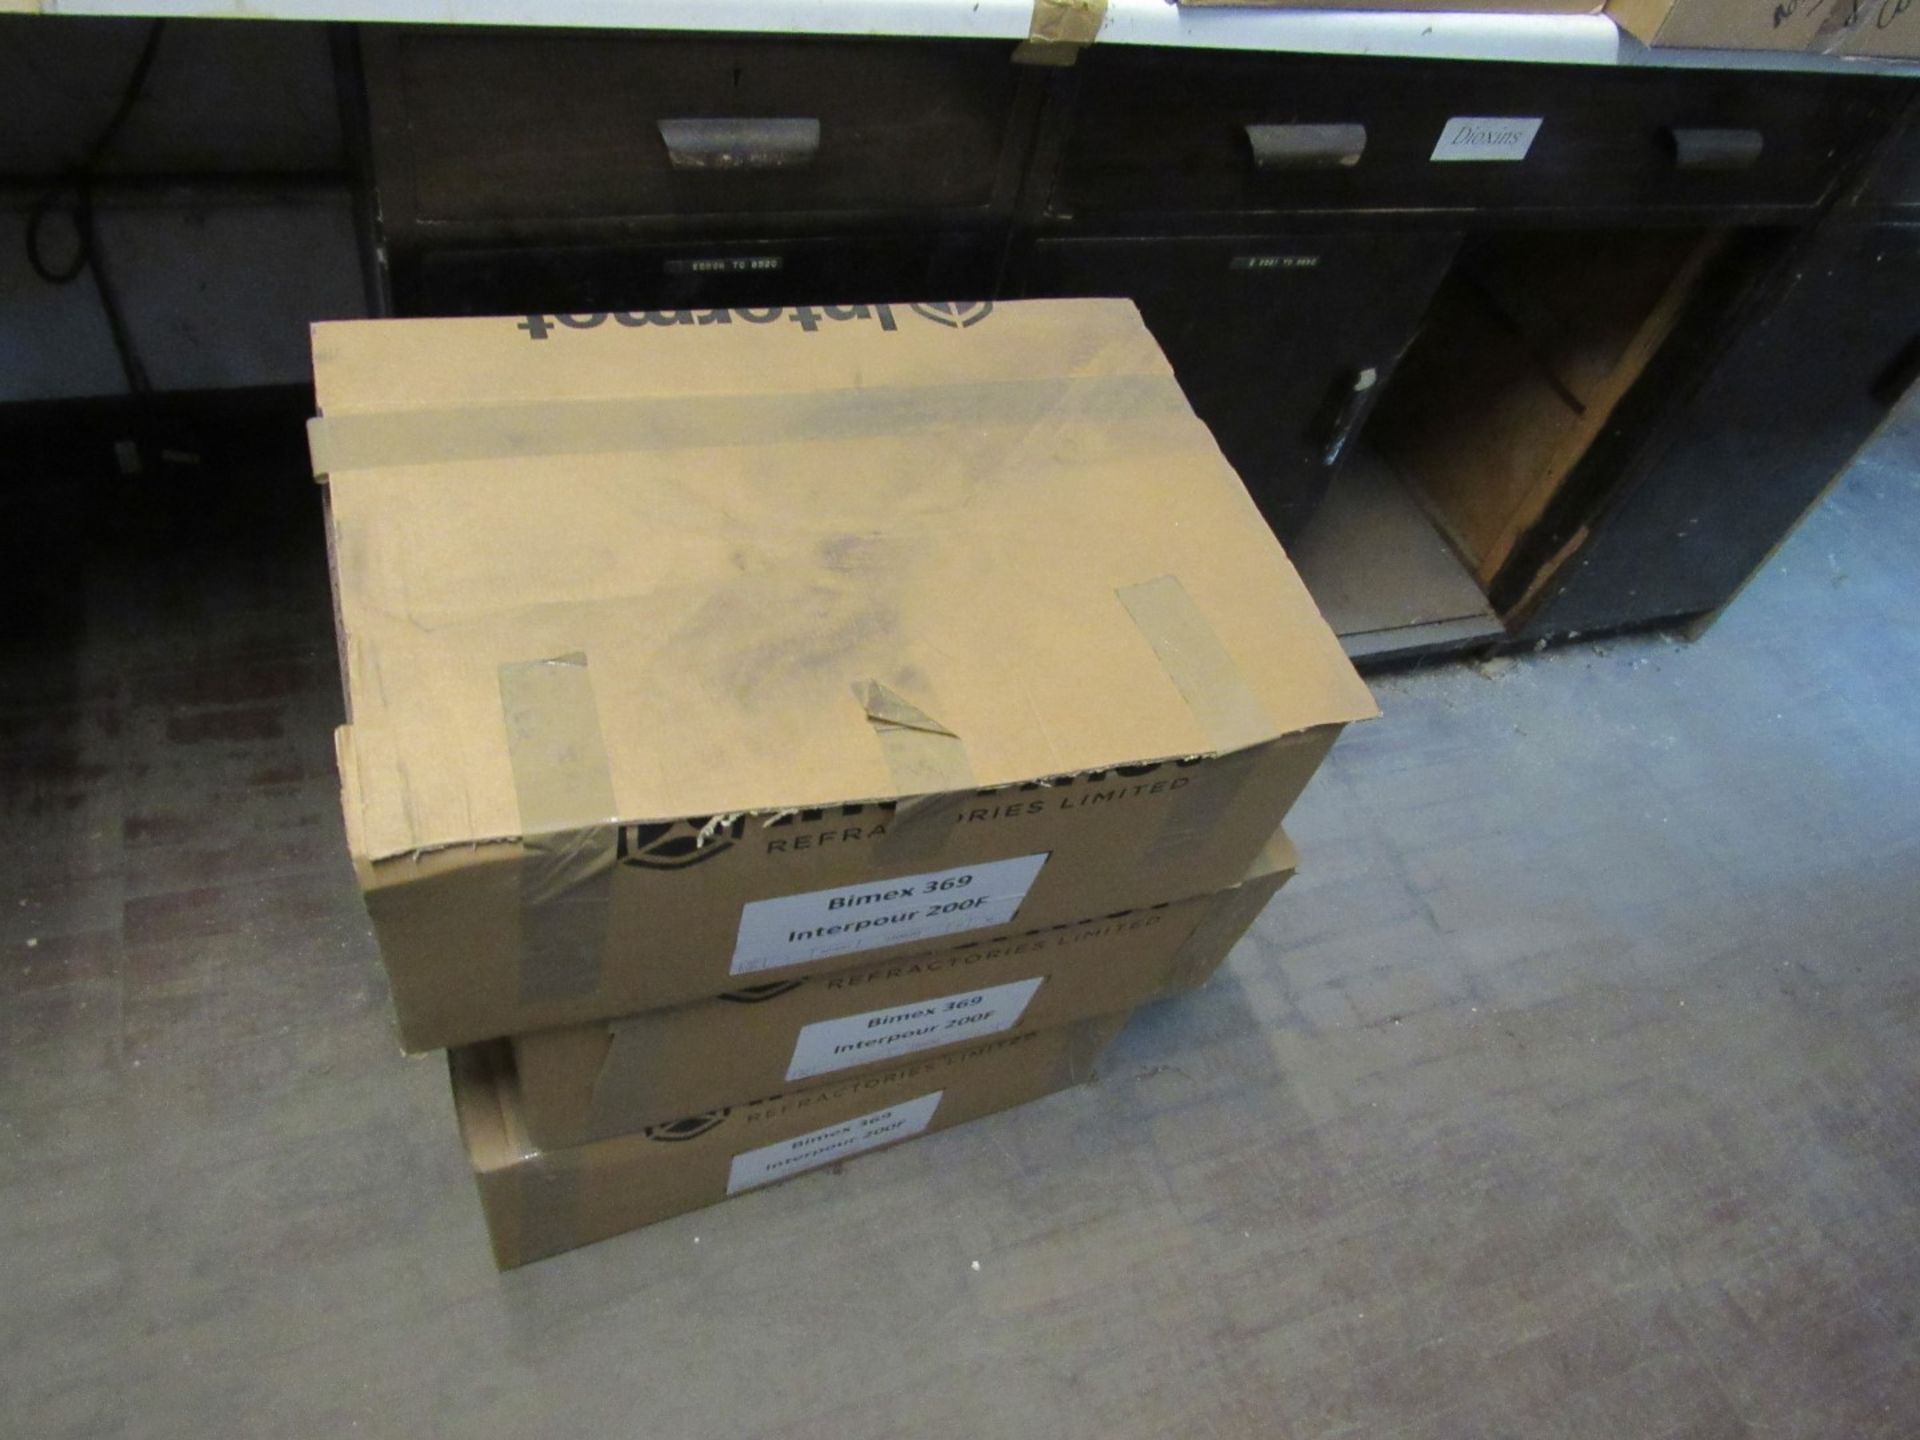 Approx. 15 Boxes of Various Internet Refractories Bimex 369 Feeder Sleeves - Image 3 of 3